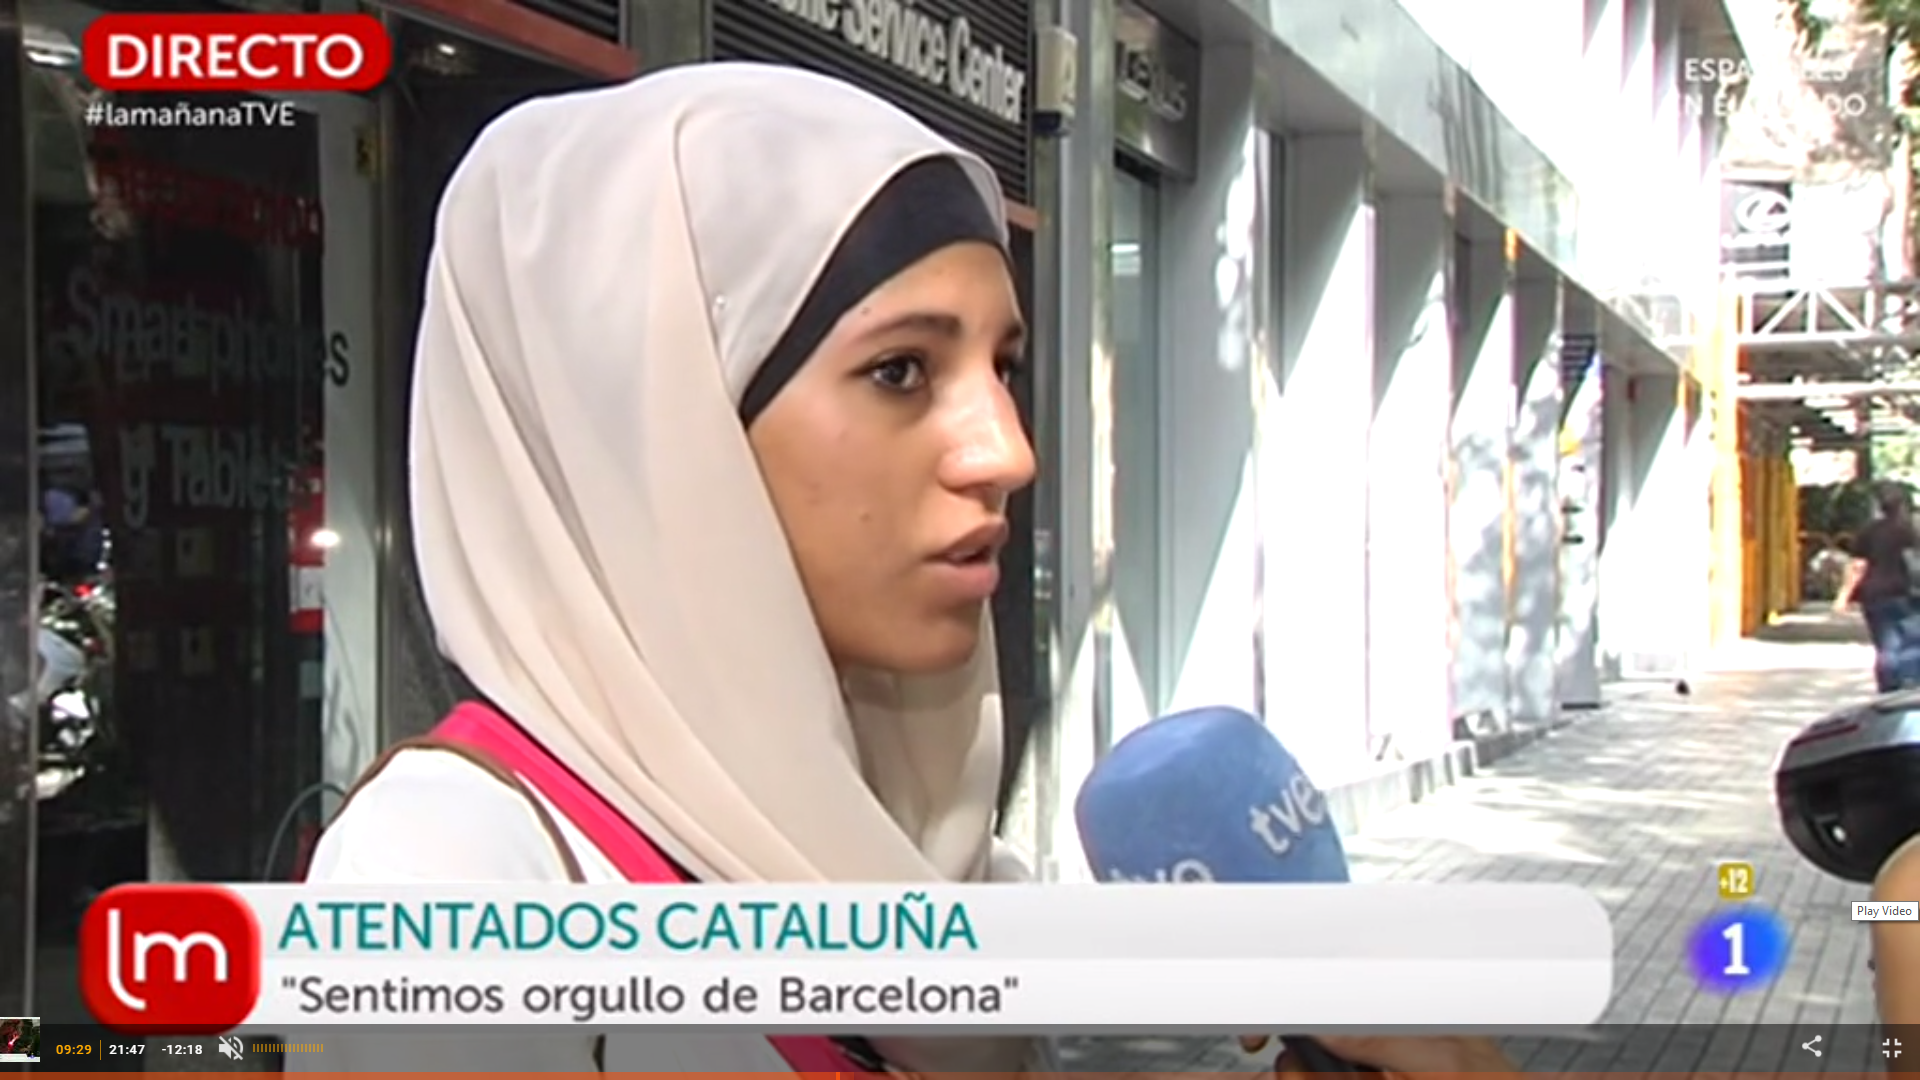 TVE, criticada per una entrevista “racista” a una dona musulmana